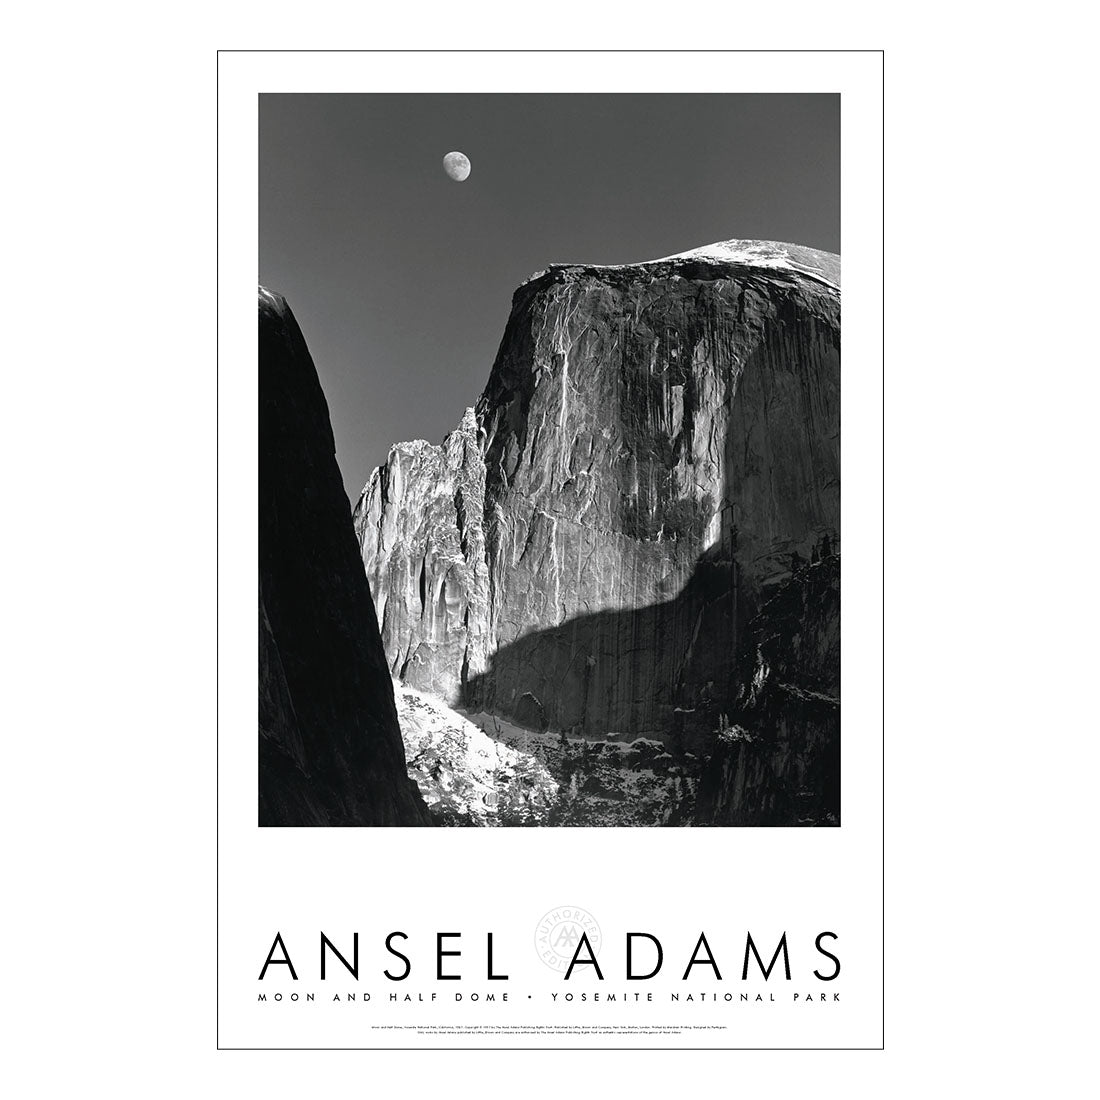 Ansel Adams Moon and Half Dome, Yosemite National Park, California PosterAnsel Adams Moon and Half Dome, Yosemite National Park, California Poster